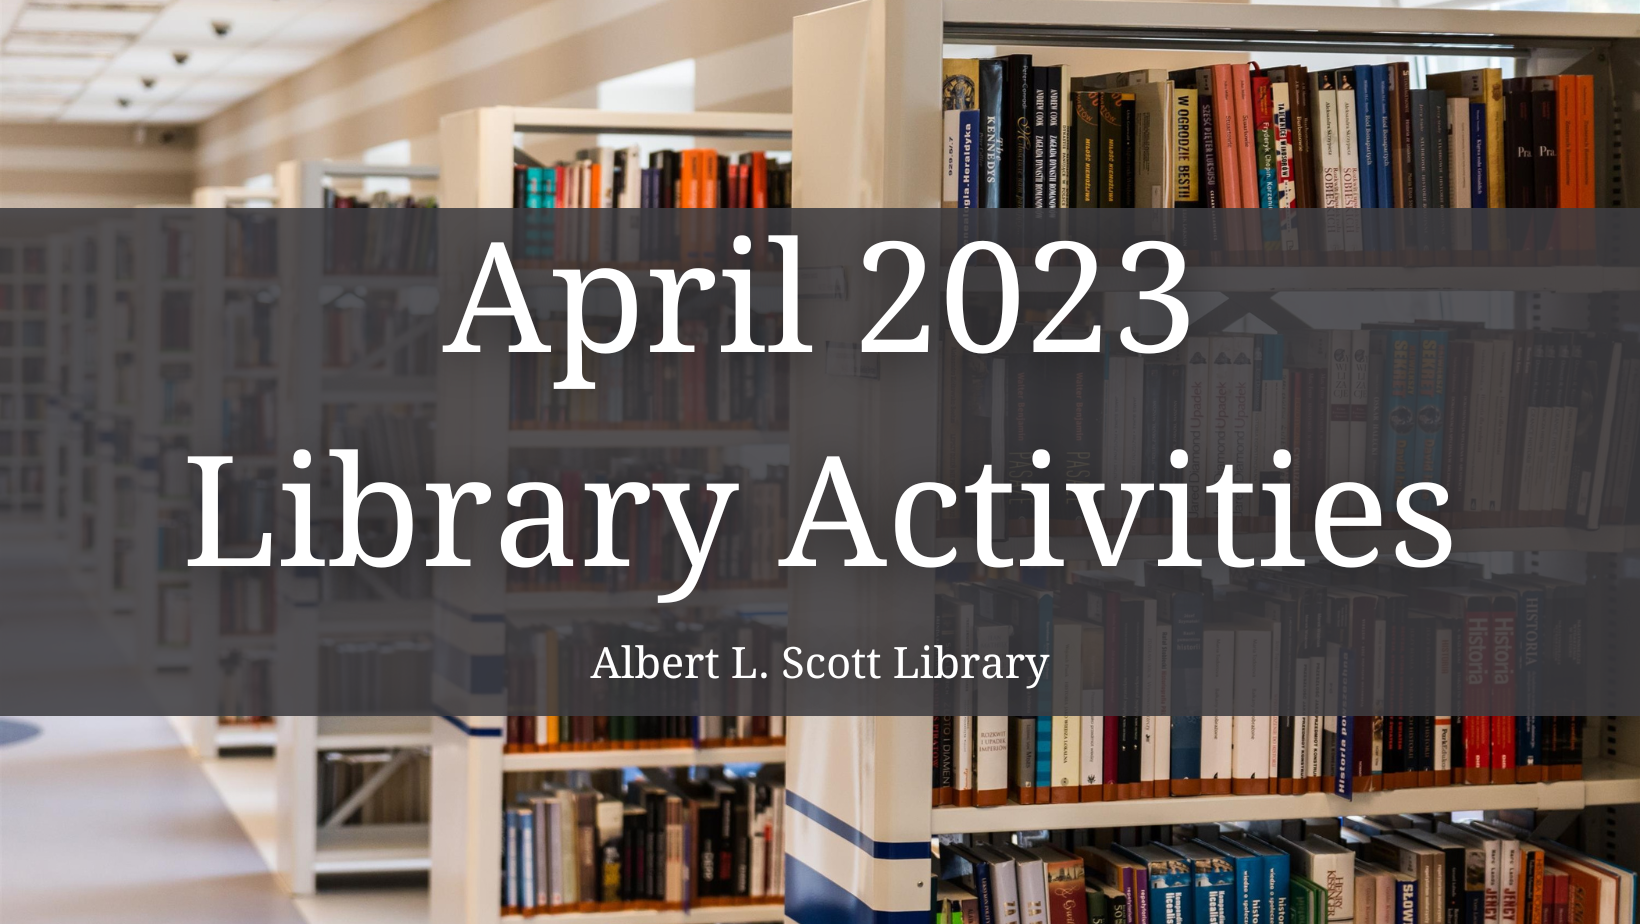 April Adult Programs at the Albert L. Scott Library